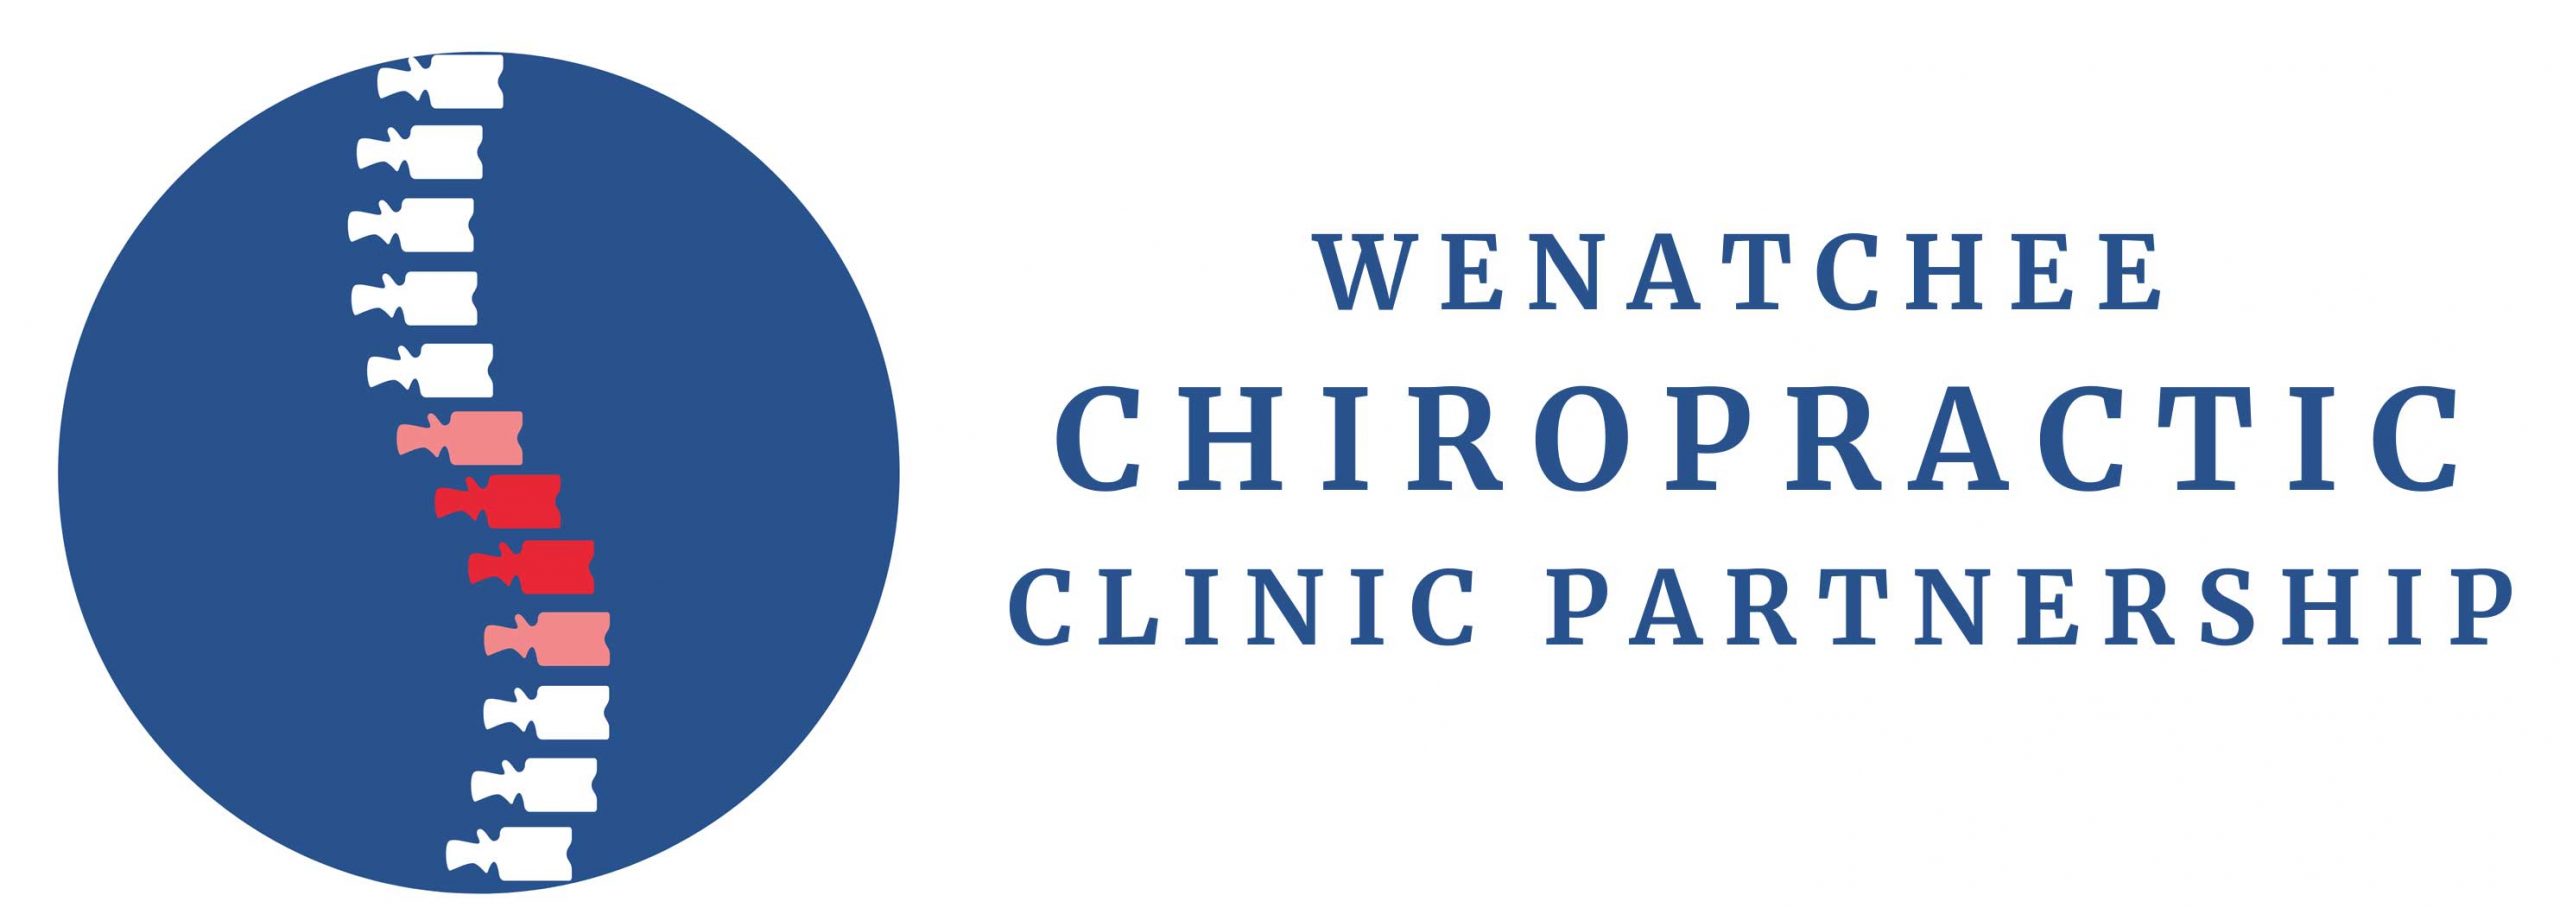 Wenatchee Chiropractic Clinic Partnership